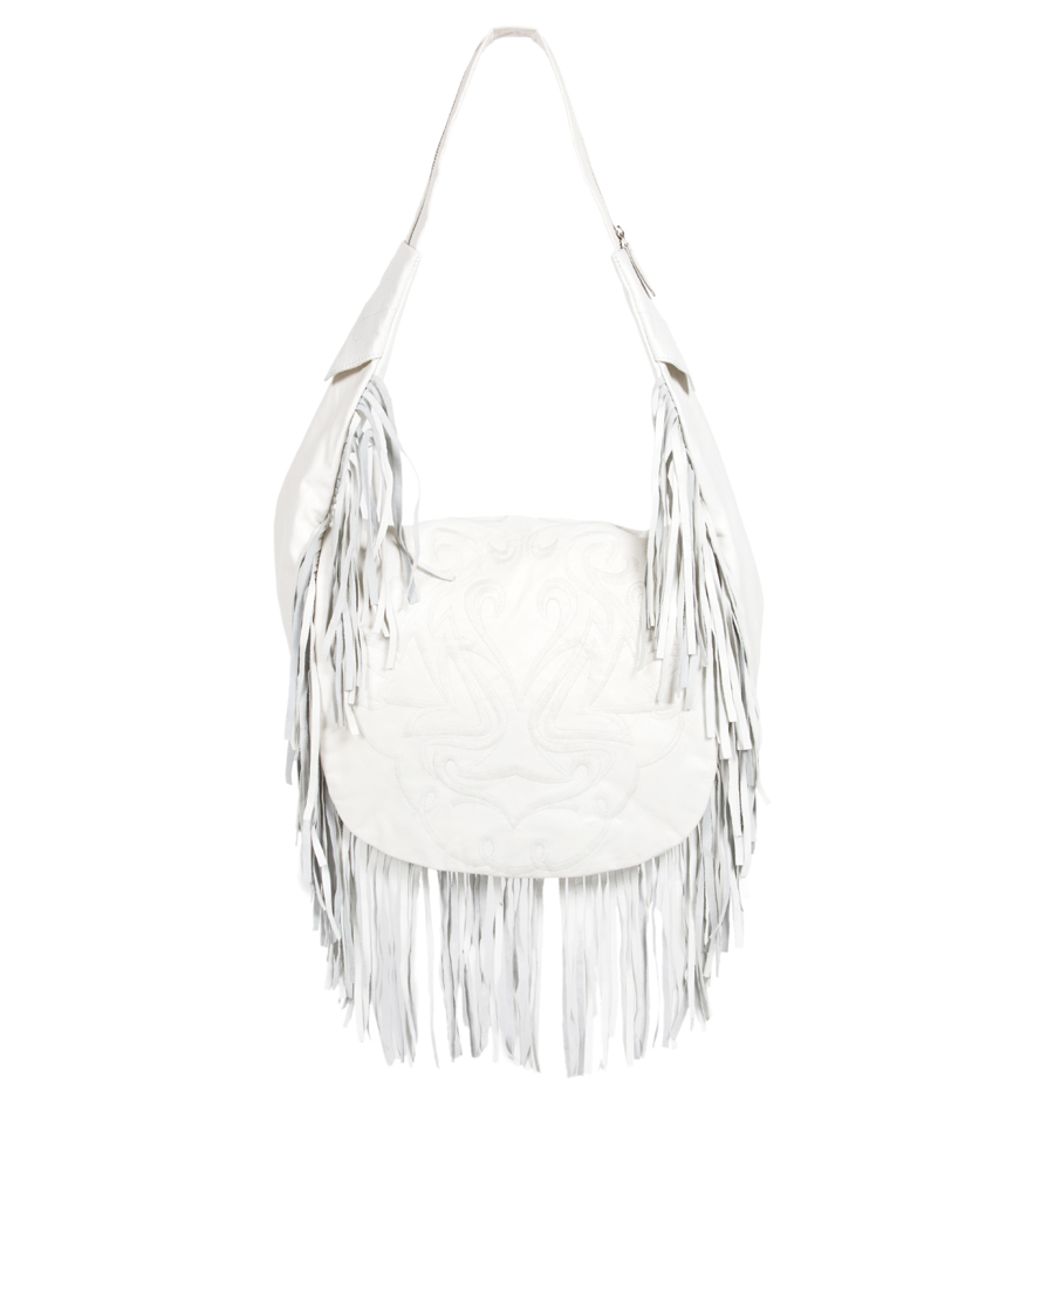 White Boho Bag | Real Leather | Fringe Purse | Bohemian Bags | Hobo Tote  Handbag : Amazon.ca: Clothing, Shoes & Accessories